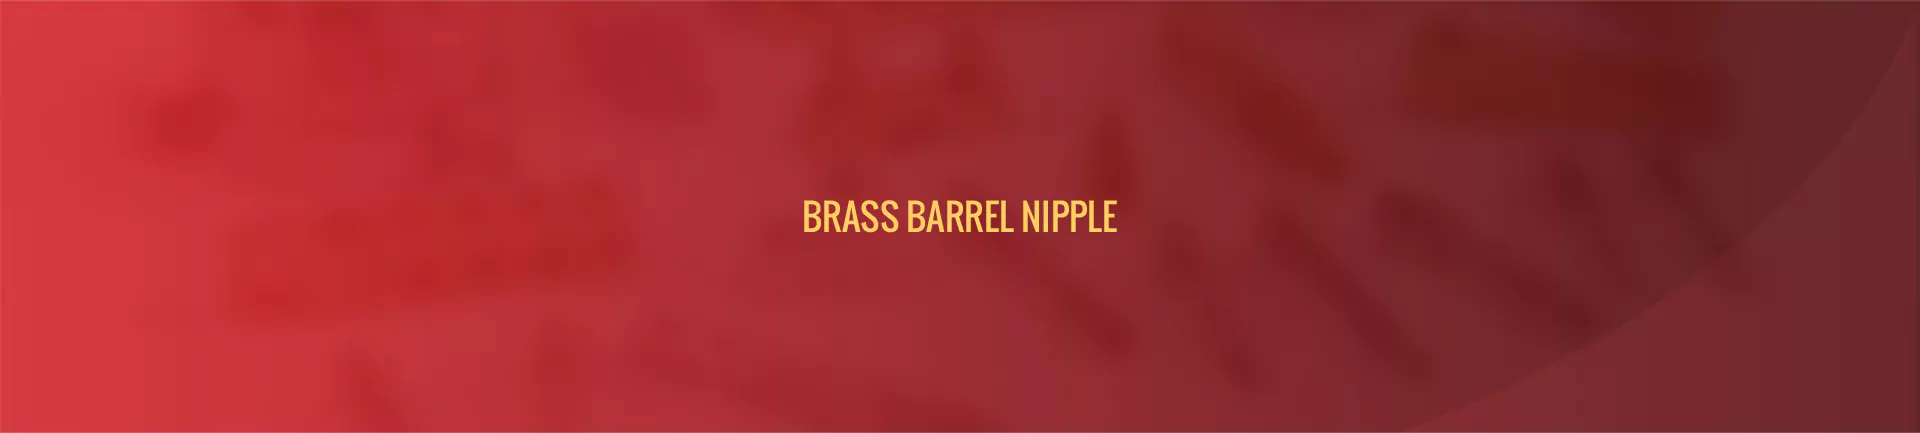 brass_barrel_nipple-banner